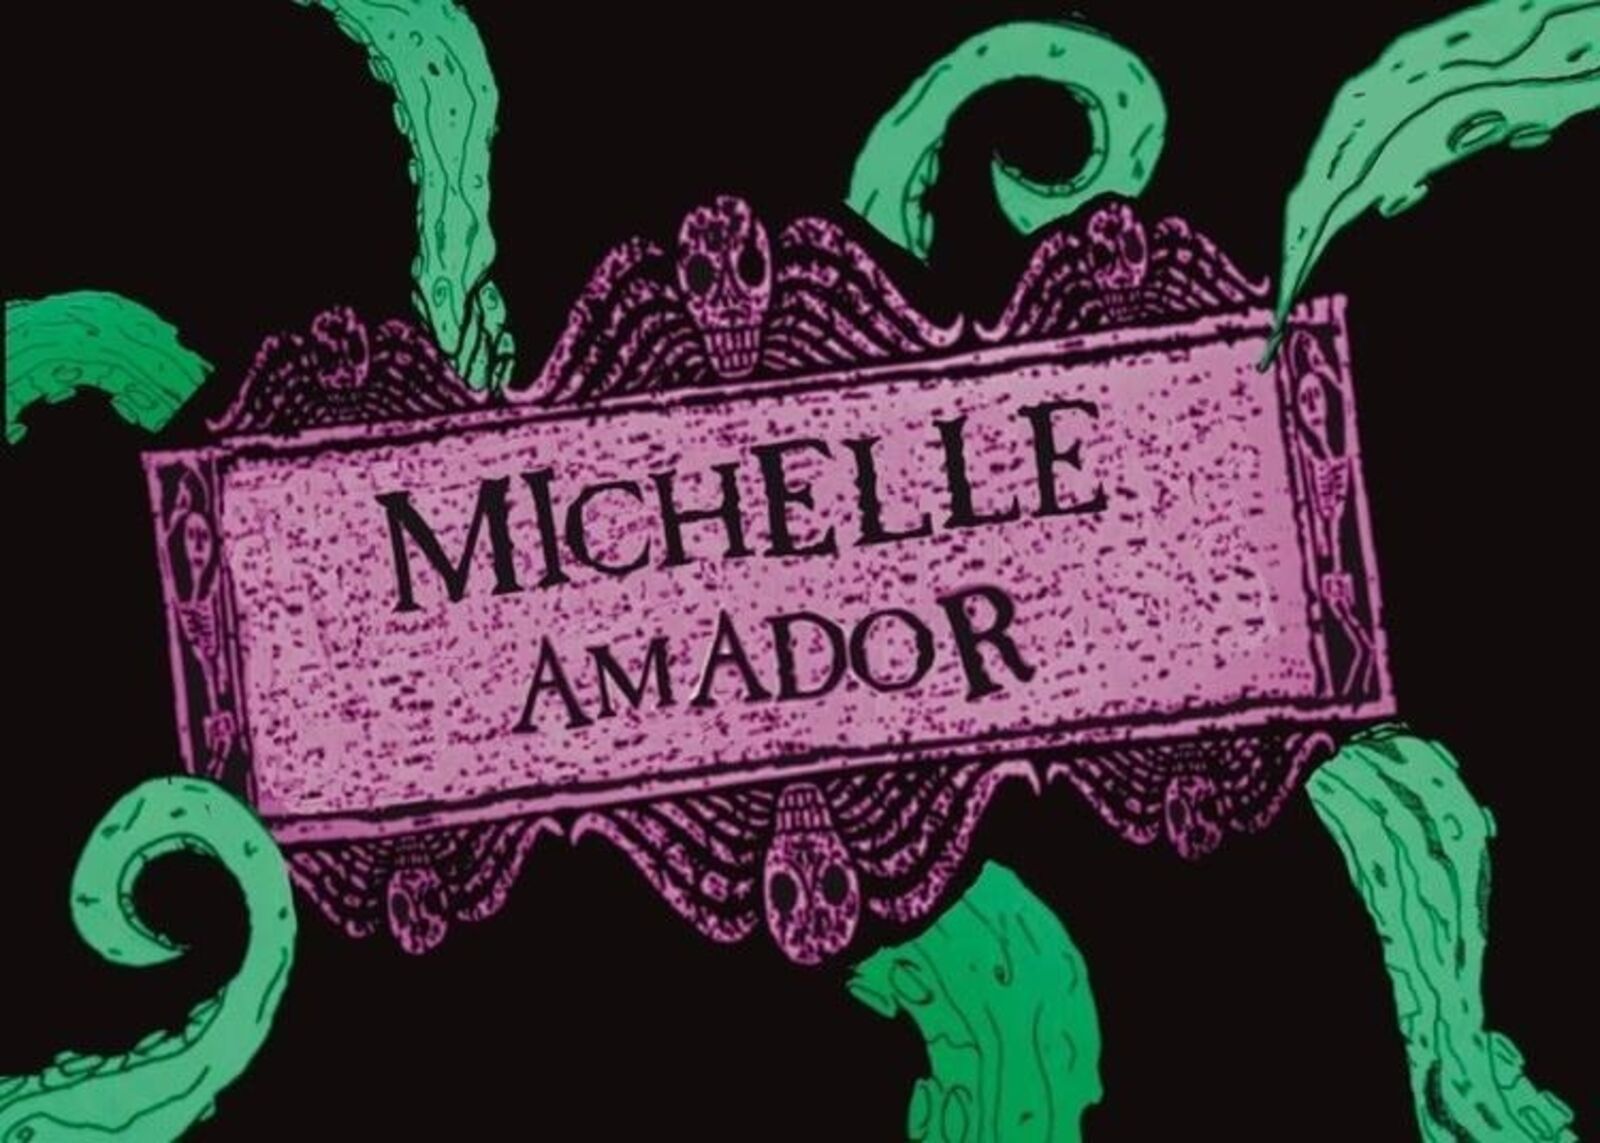 See Michelle Amador profile